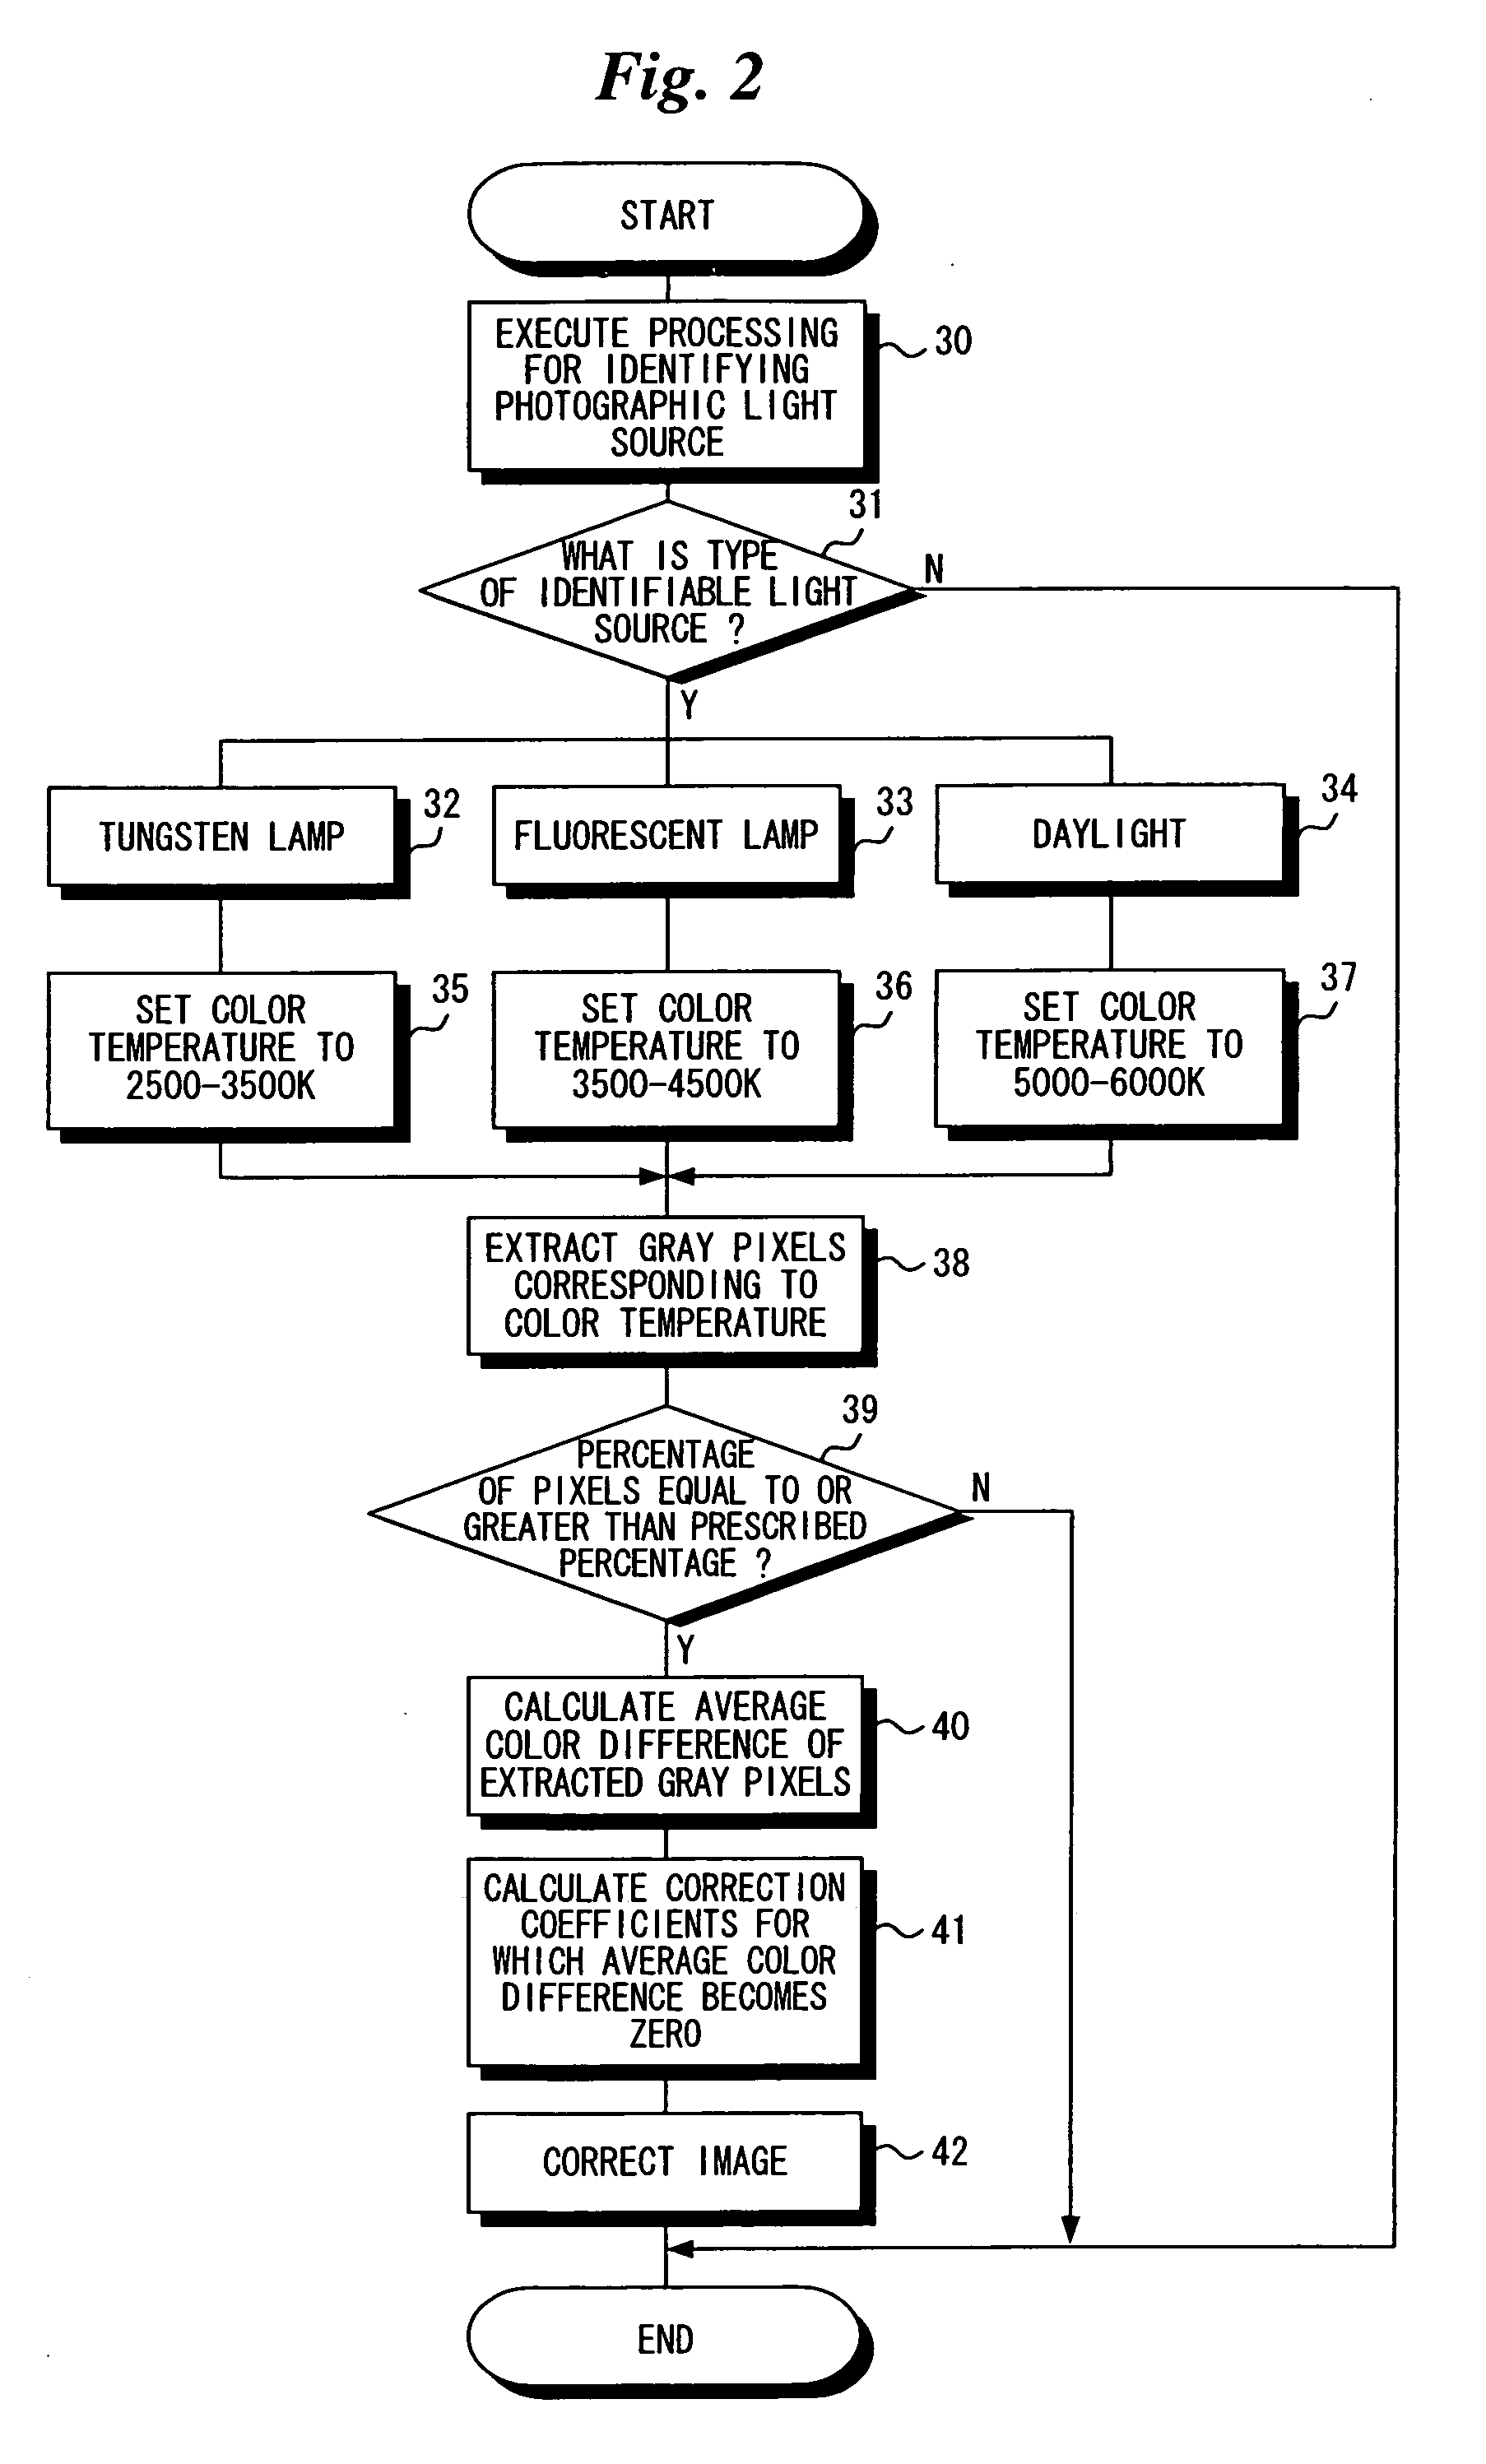 Image correction apparatus, method and program